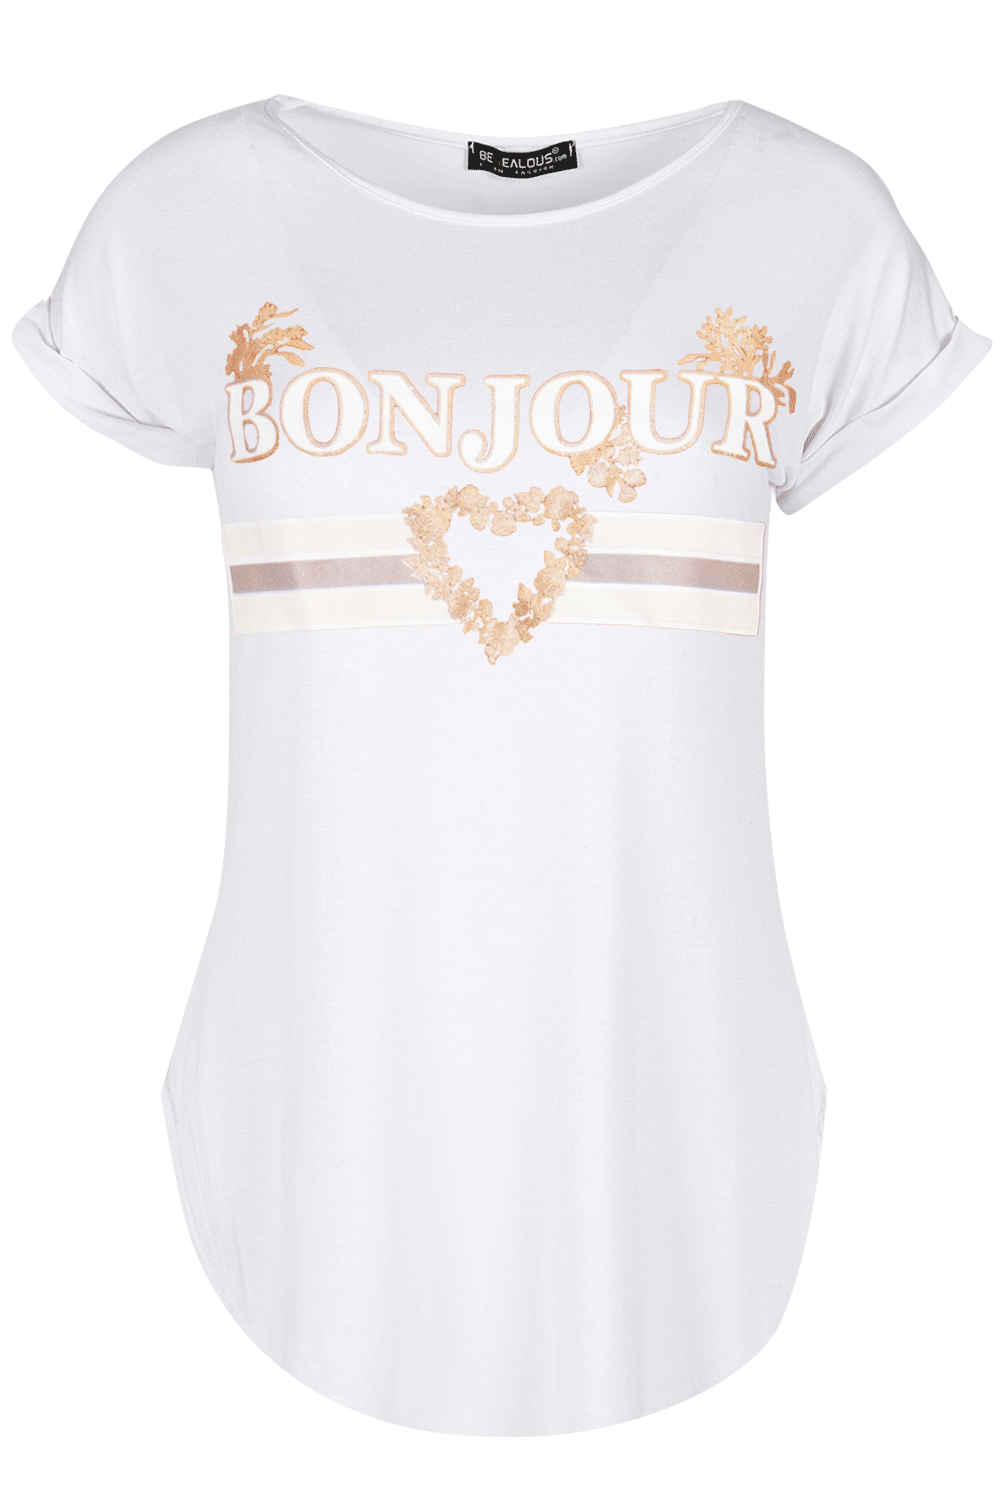 Julia Bonjour Slogan Print Curved Hem Tshirt - bejealous-com